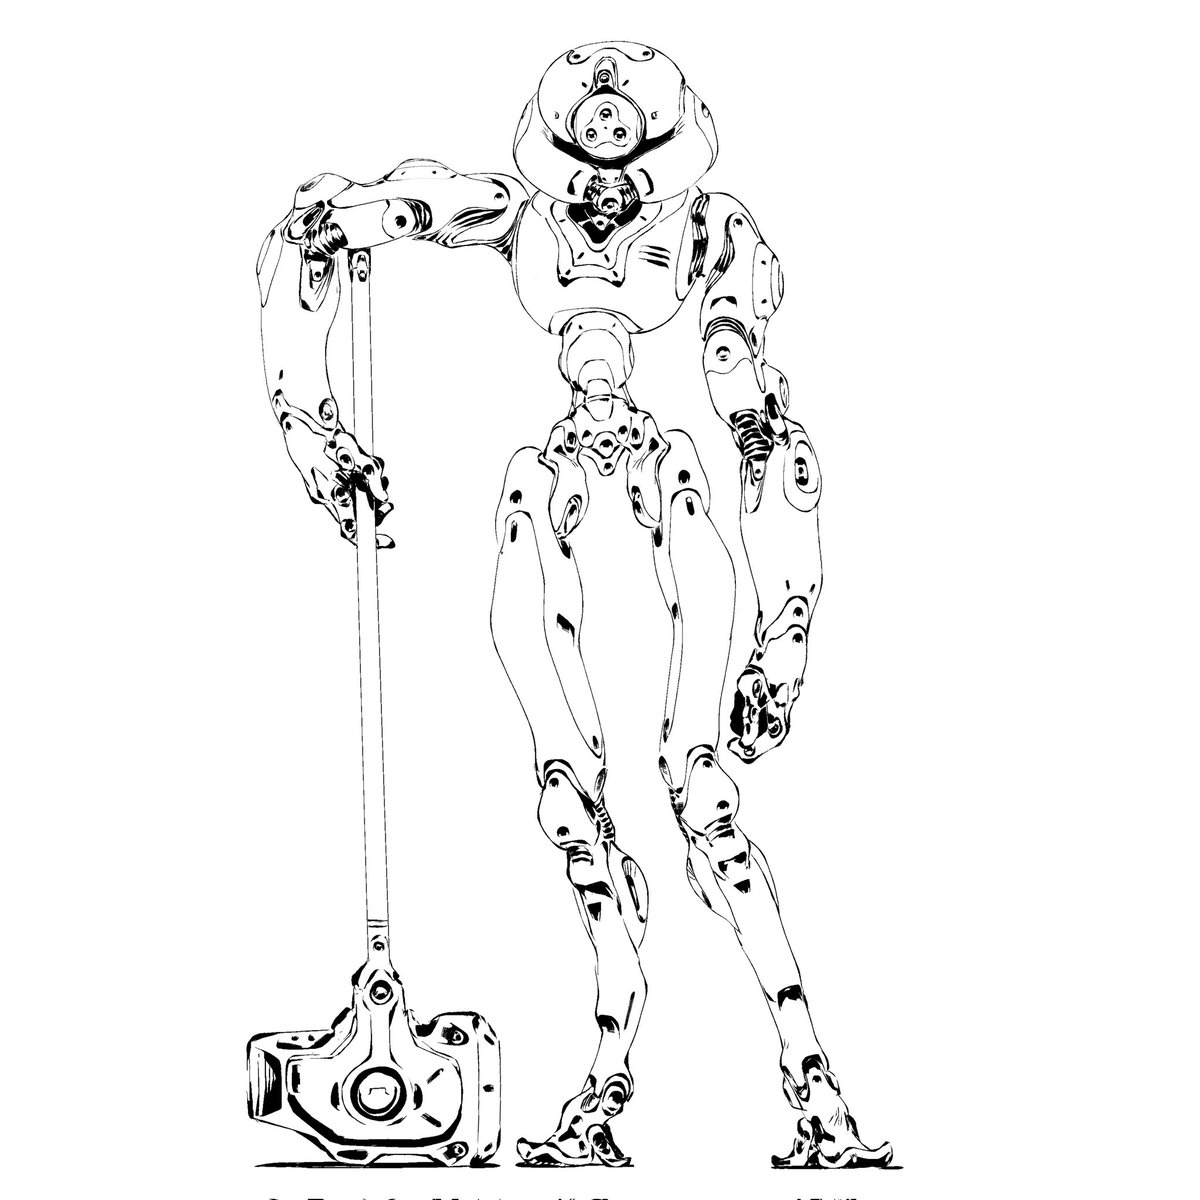 Exploring my Krita process at night again.
.
.
.
#marchofrobots #marchofrobots2024 #sketch #sketchbook #doodle #art #ArtistOnTwitter #drawing #draw #ink #dailysketch #dailyart #conceptart #conceptdesign #sf #scifi #scifiart #robot #mecha #mech #mechdesign #characterdesign #Krita